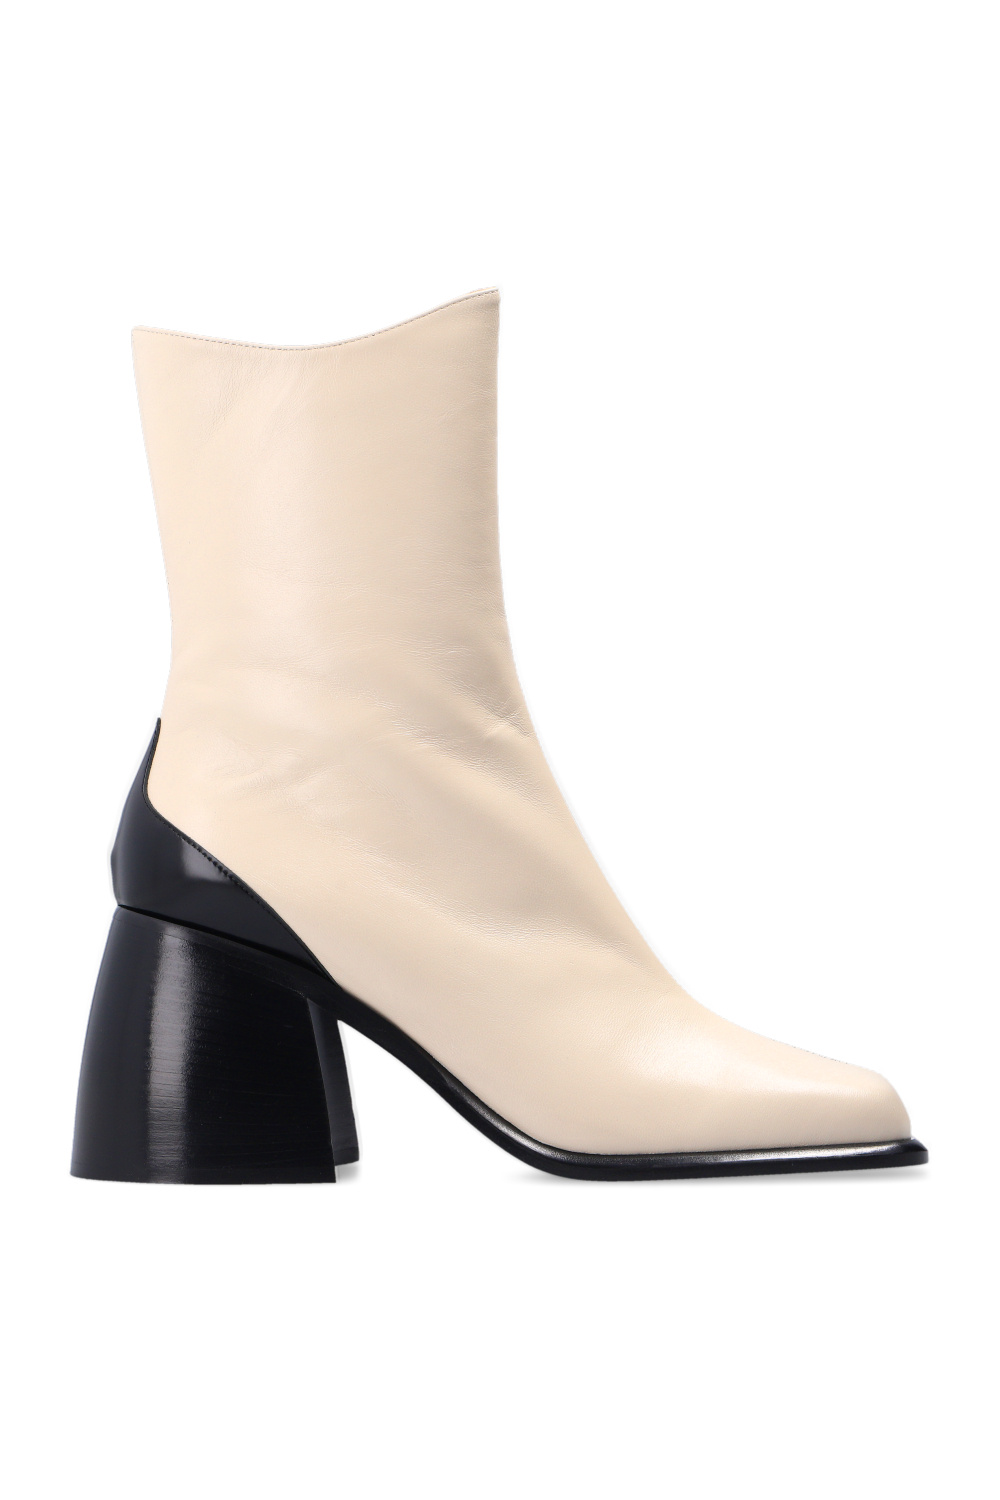 Wandler ‘Ella’ heeled ankle boots